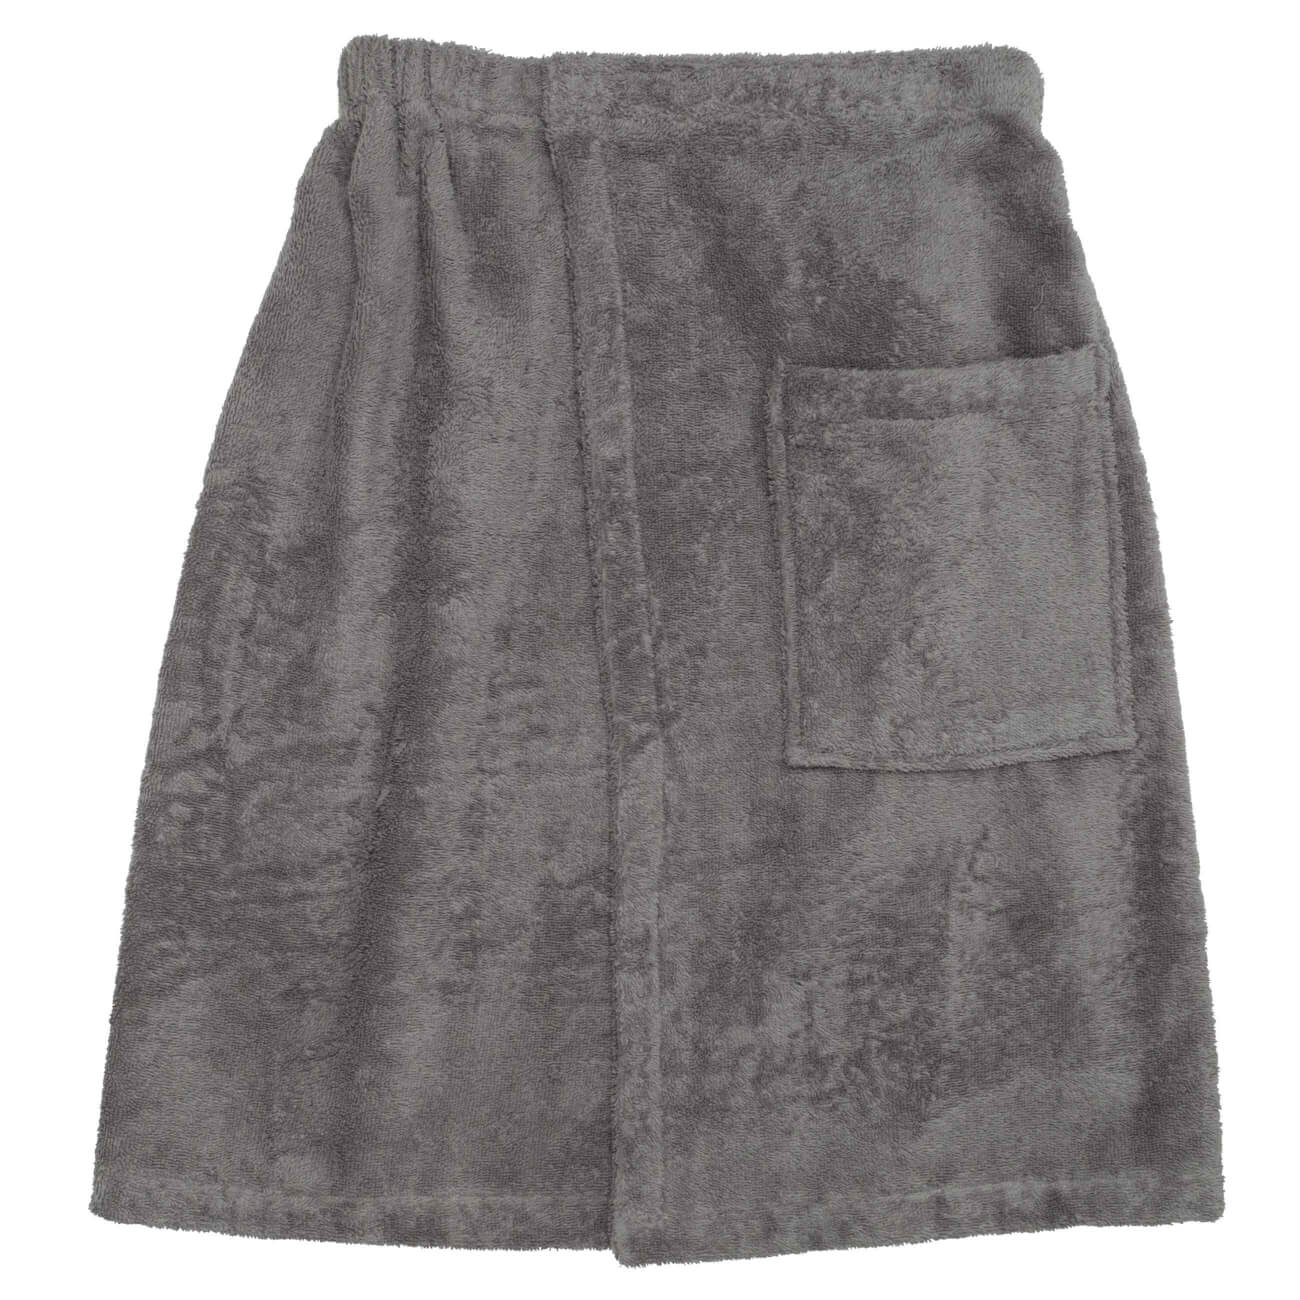 Полотенце-килт мужское, 70х160 см, на липучке, хлопок, темно-серое, Spa towel полотенце ножки серебро р 50х70